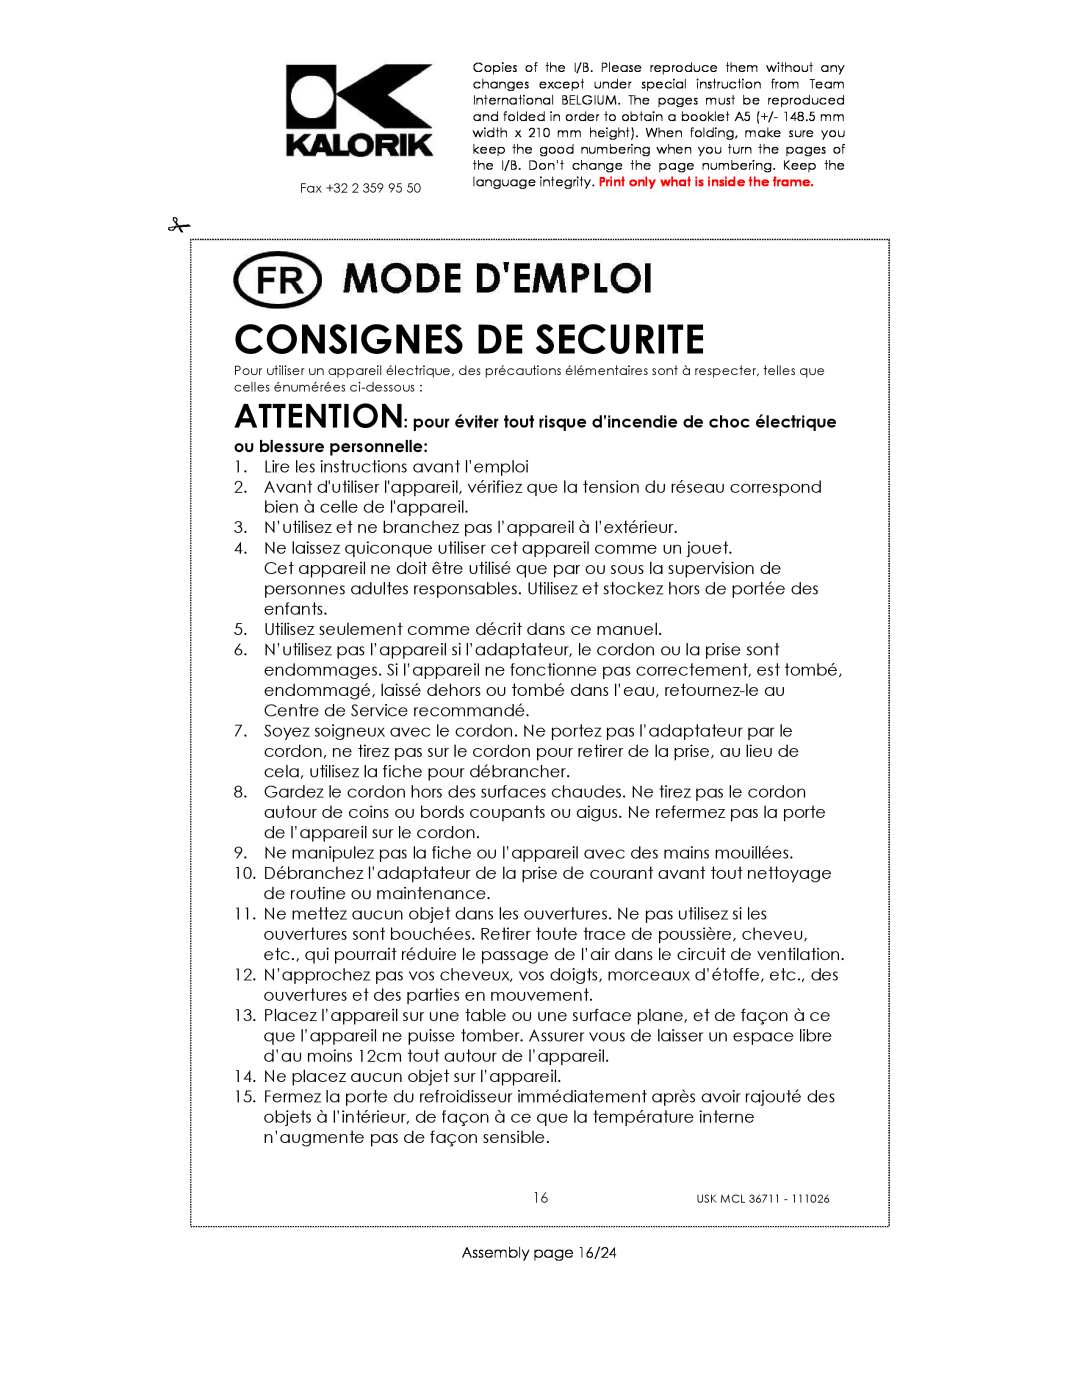 Kalorik USK MCL 36711 manual Consignes De Securite 